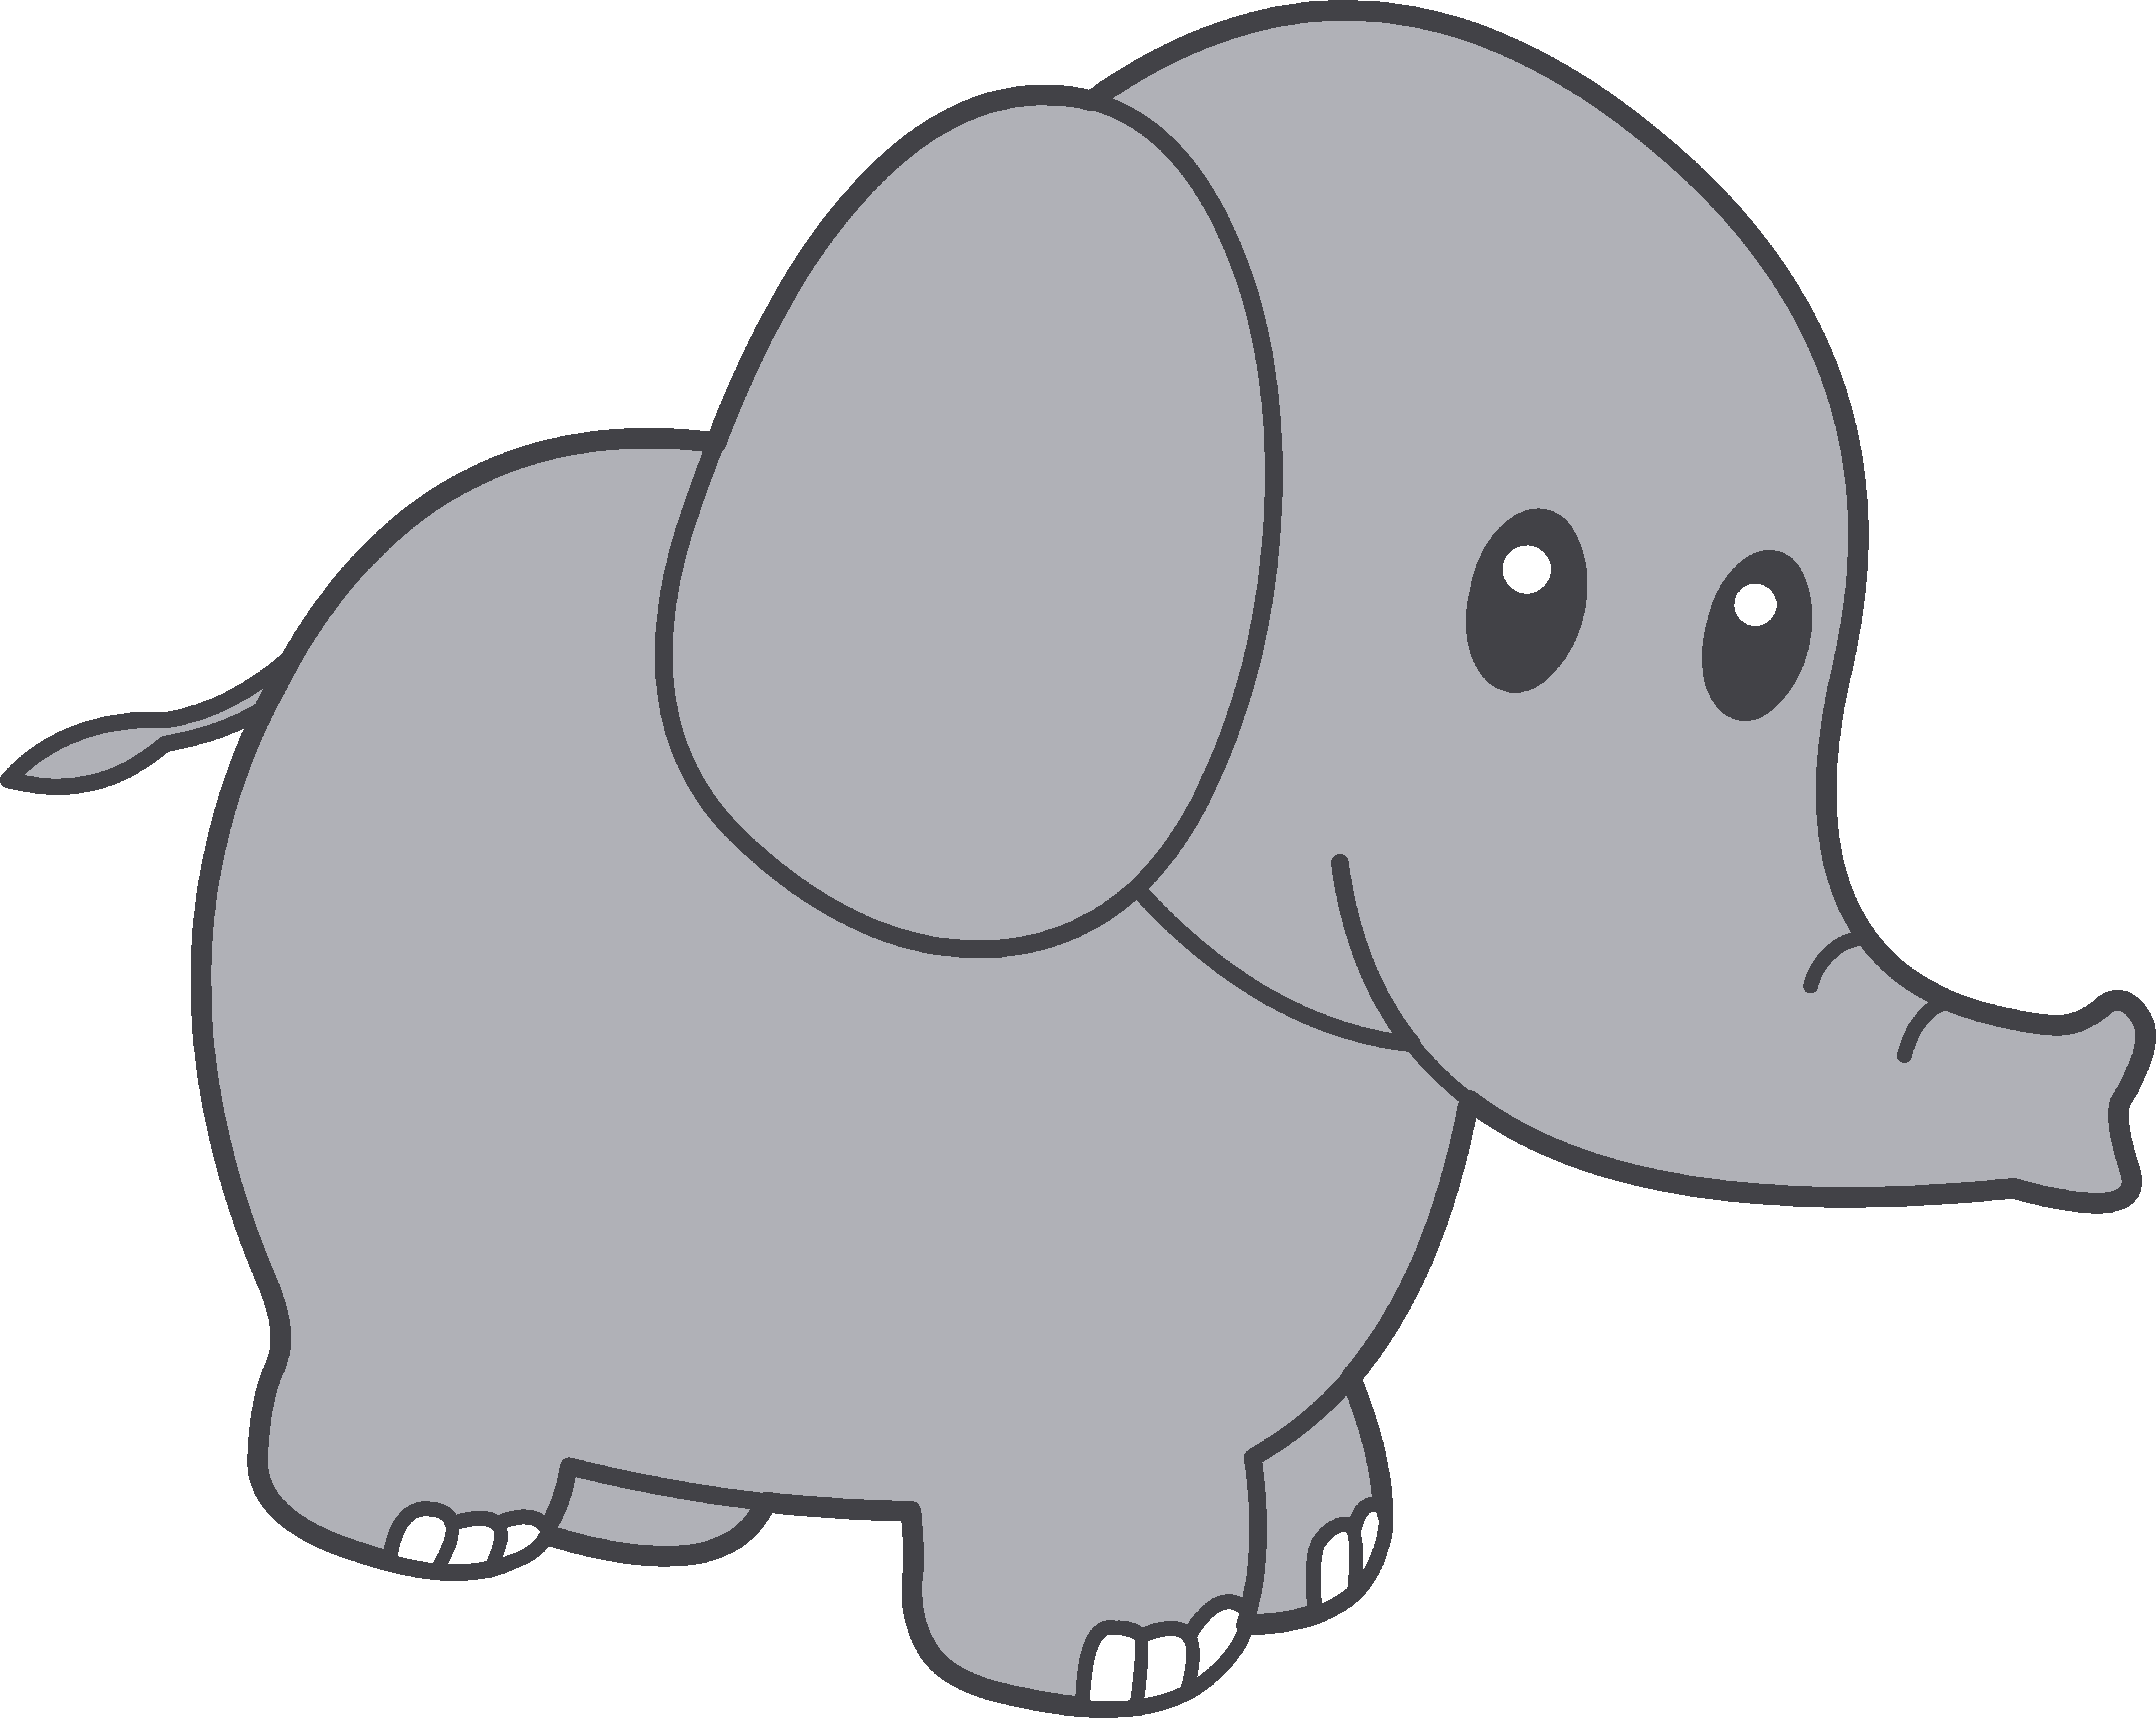 Free Animated Elephant, Download Free Animated Elephant png images